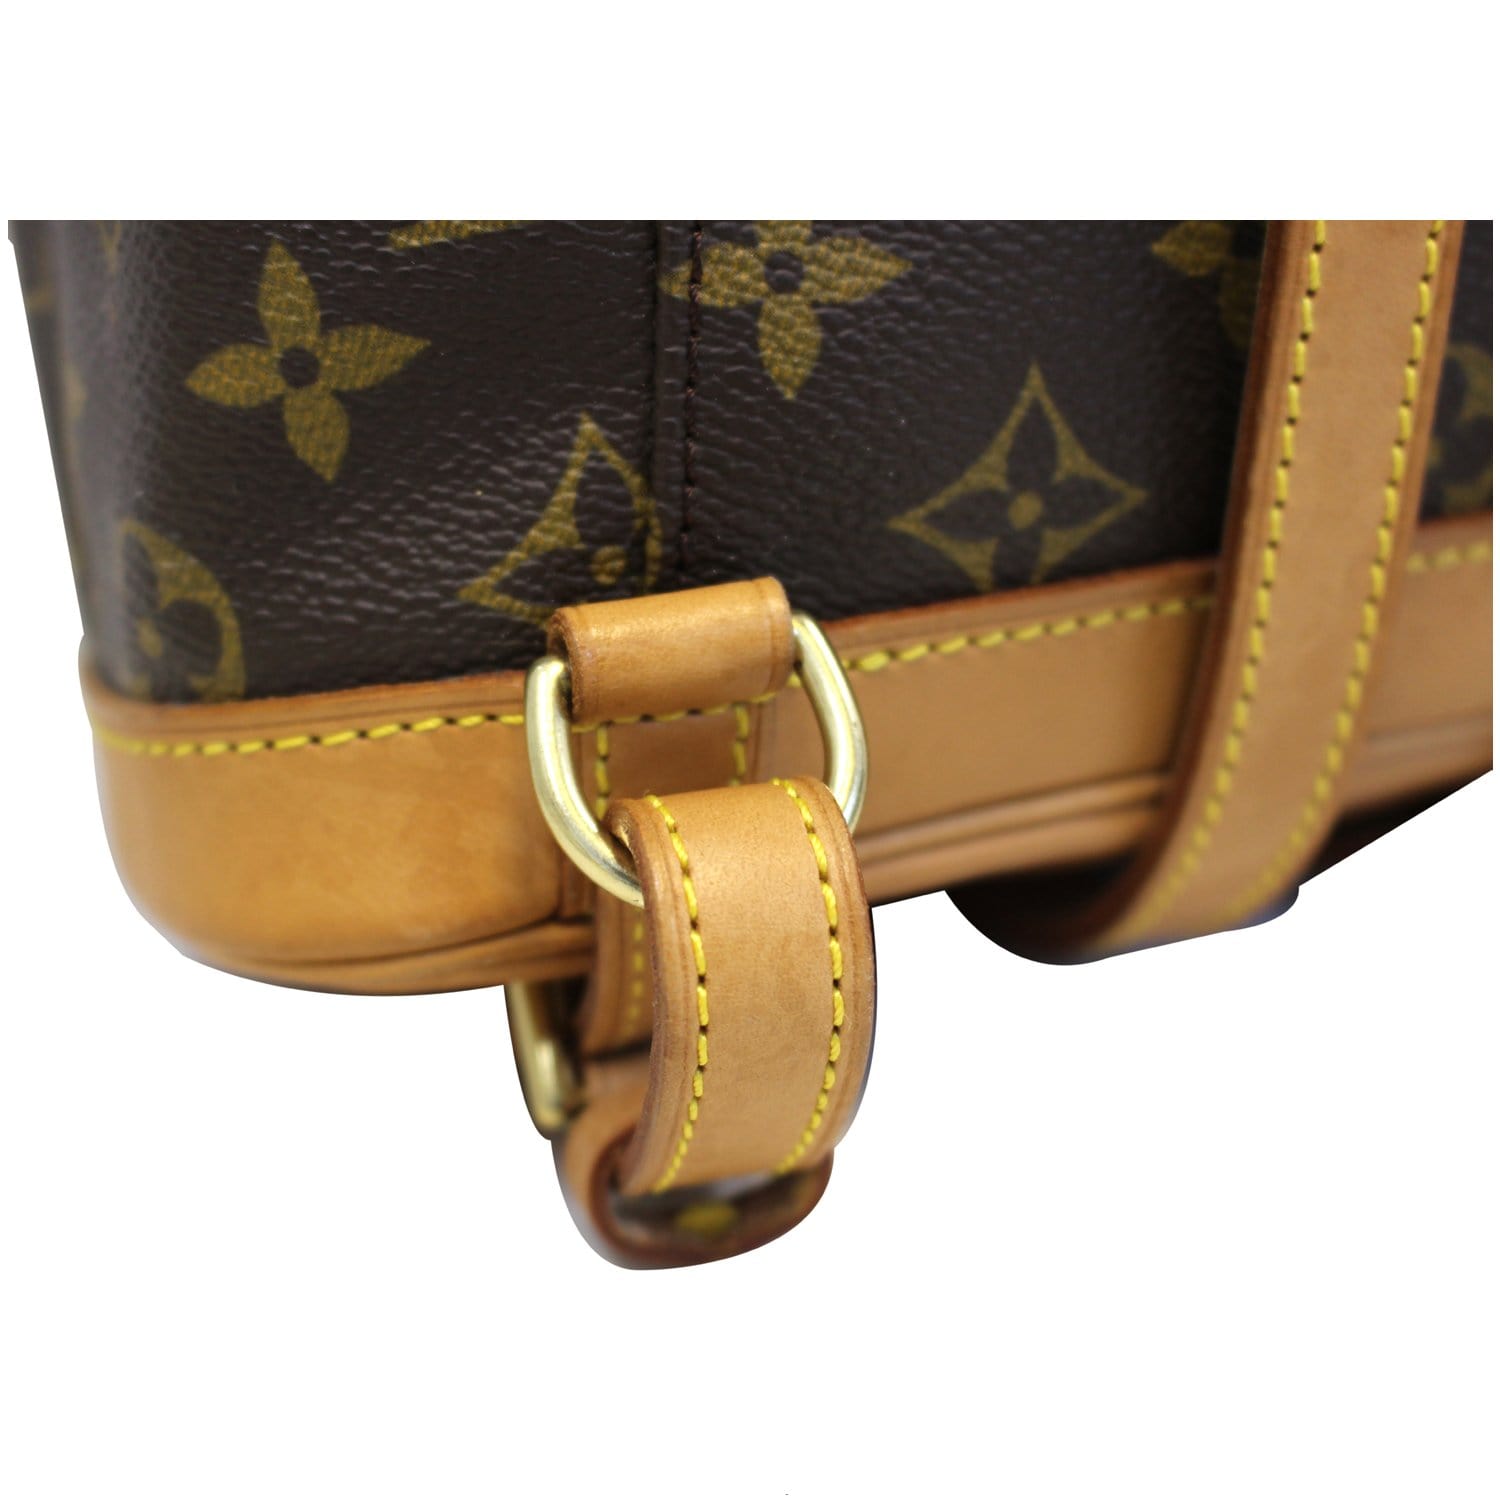 Louis Vuitton Buckle Small Bags & Handbags for Women